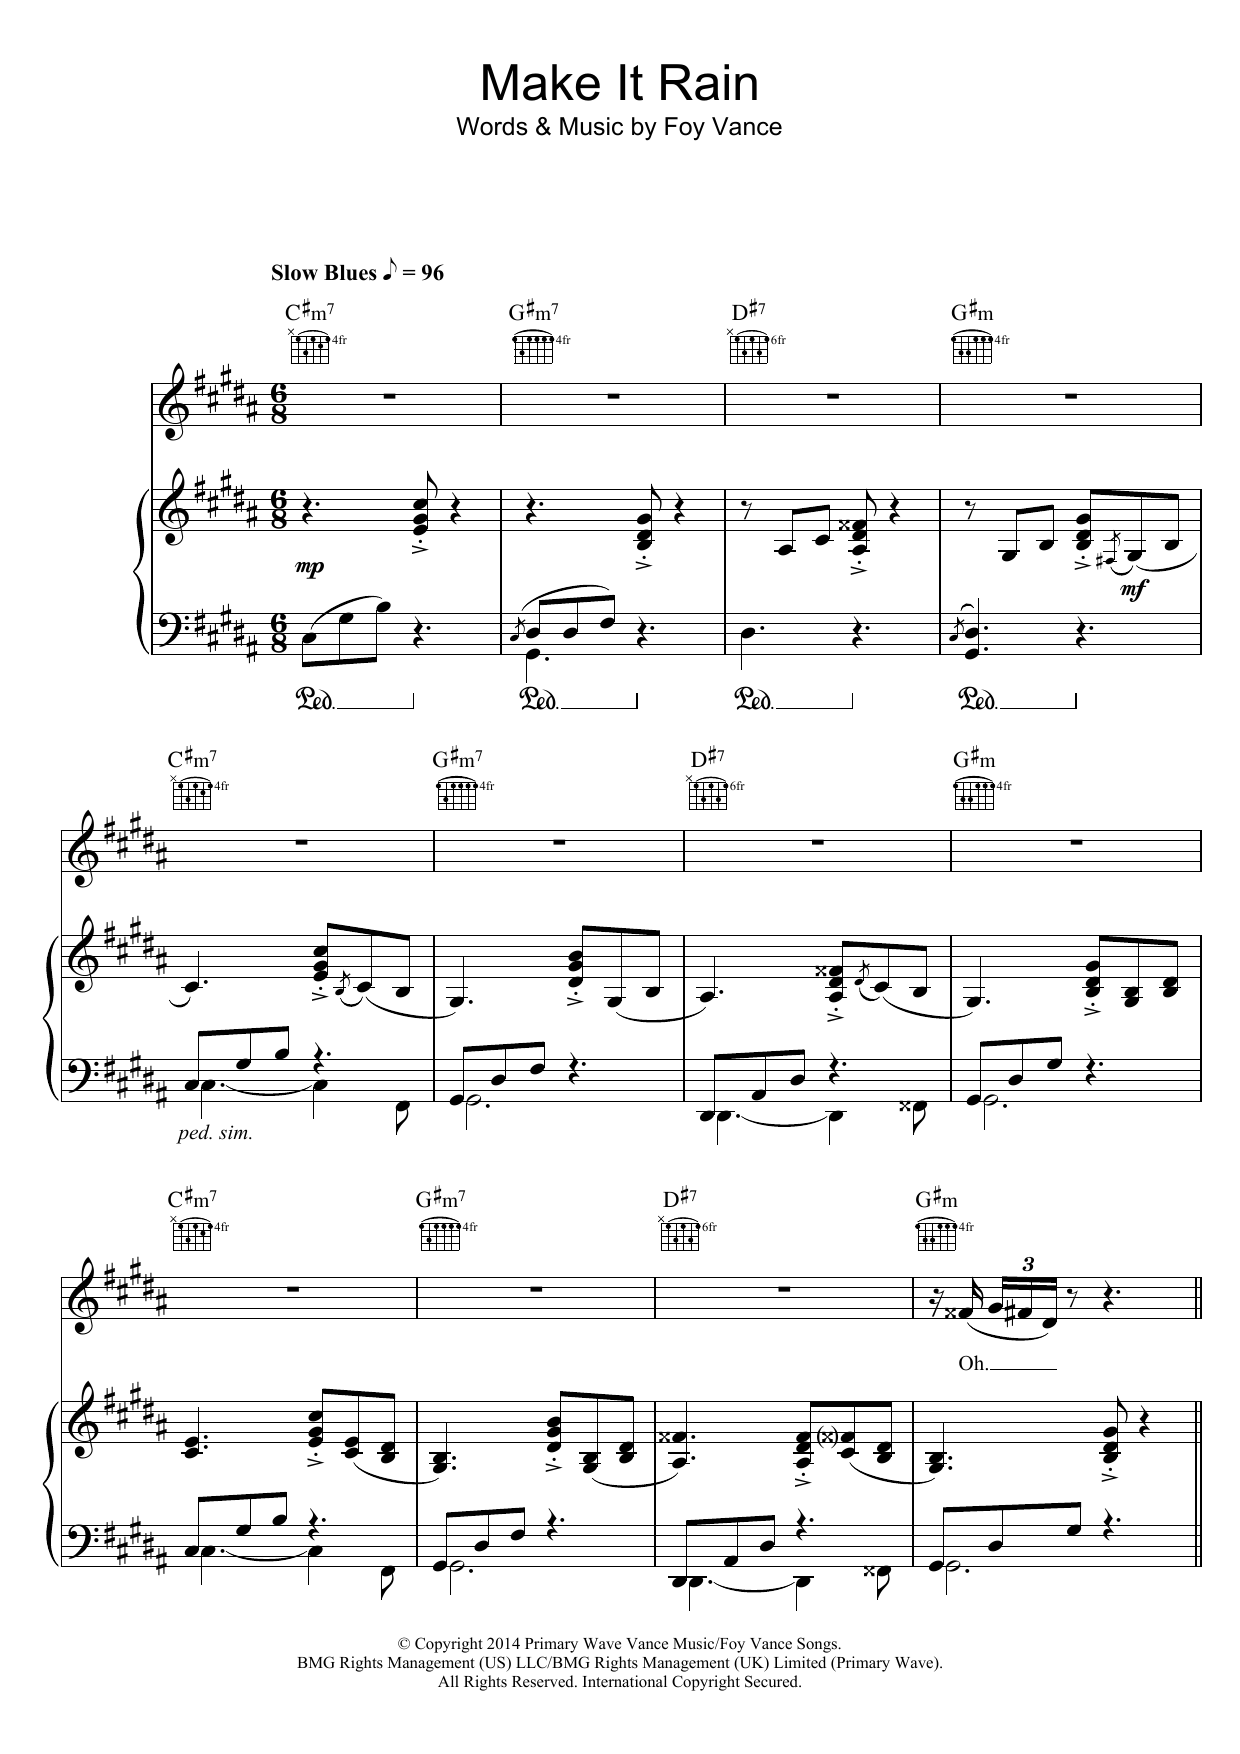 Download Ed Sheeran Make It Rain Sheet Music and learn how to play Lyrics & Chords PDF digital score in minutes